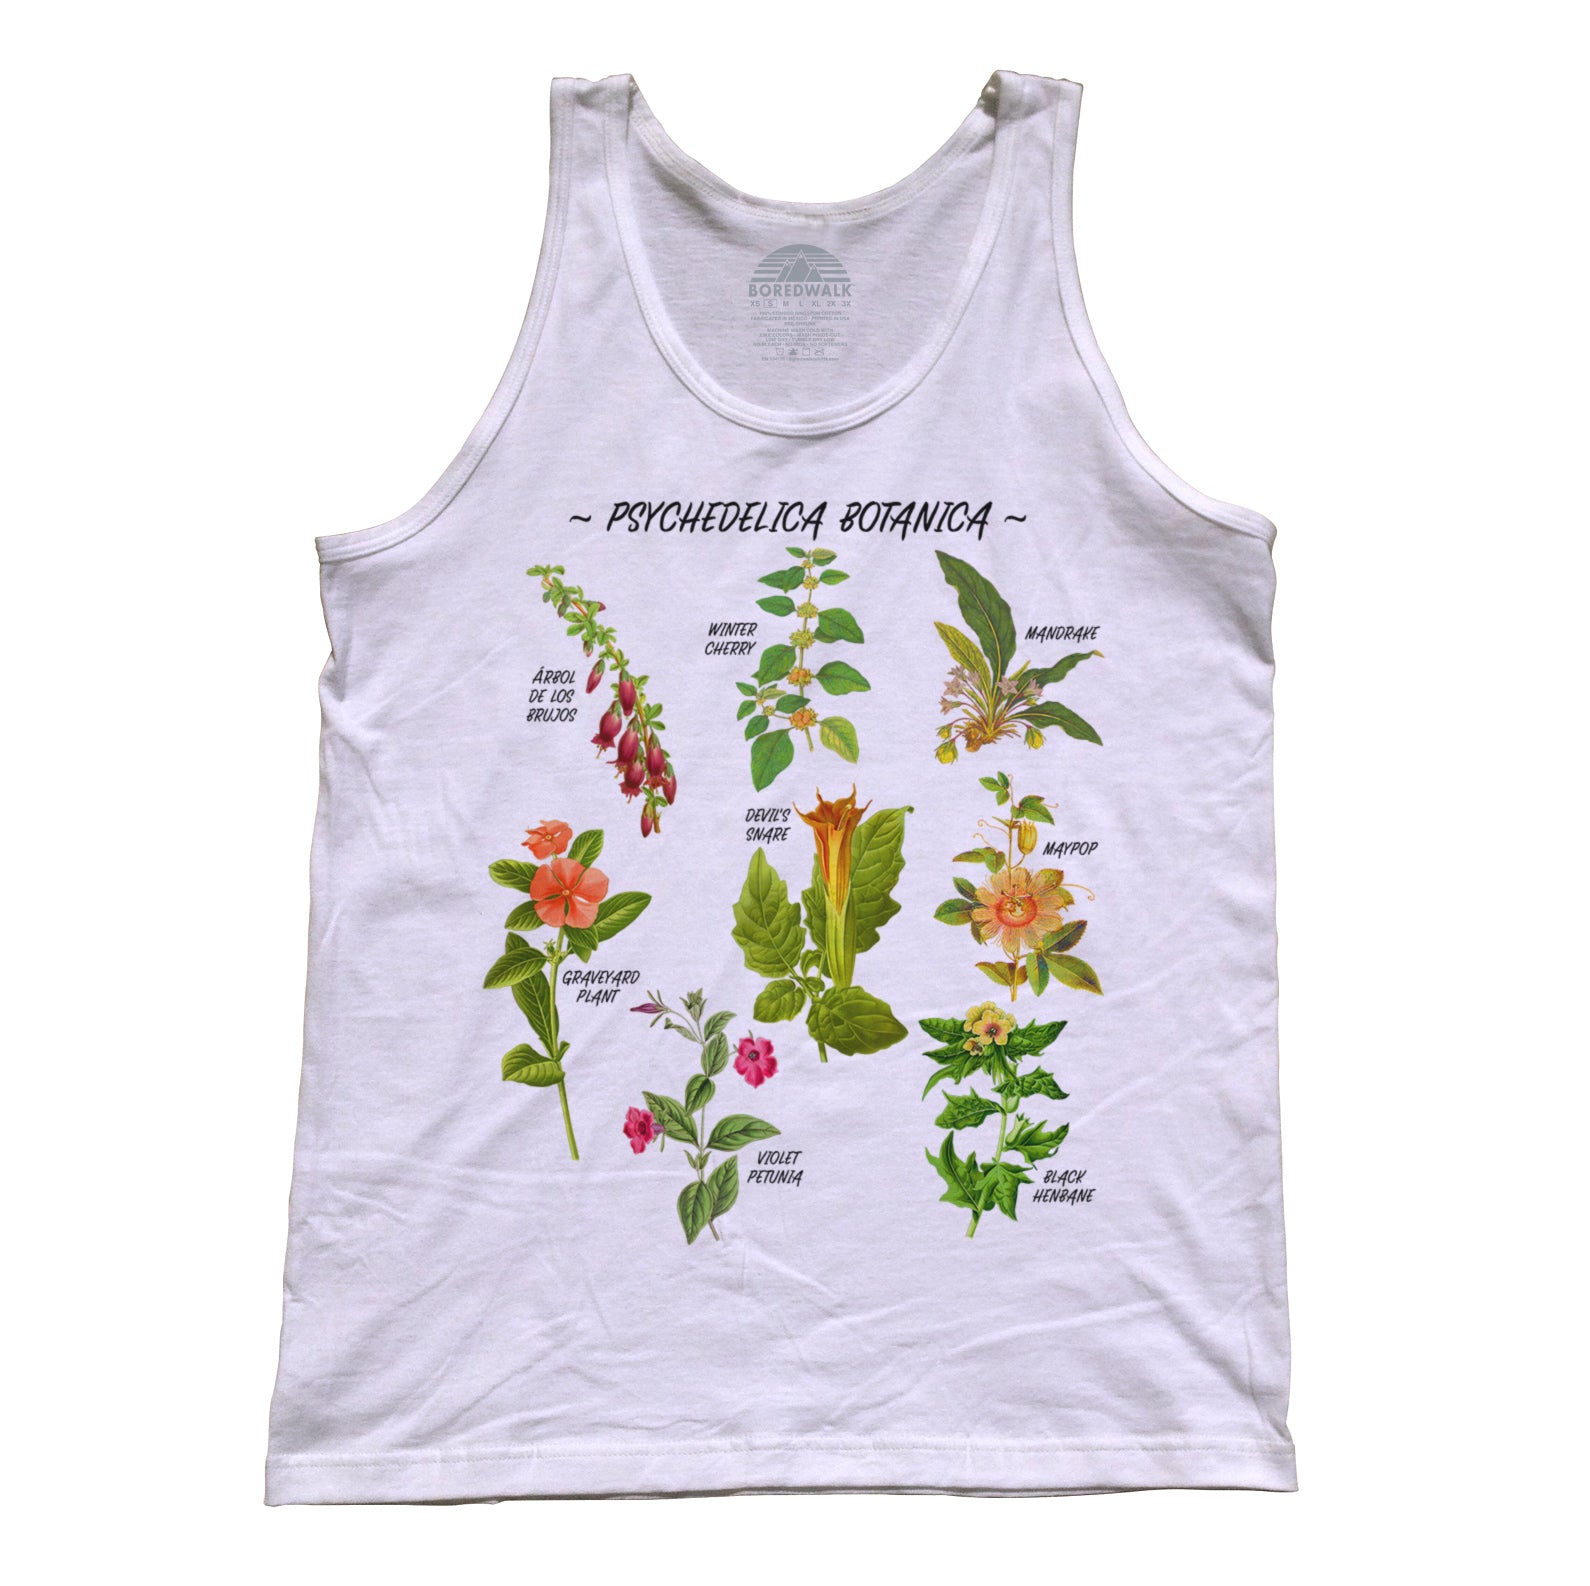 Boredwalk Men's Psychedelica Botanica T-Shirt, Large / White